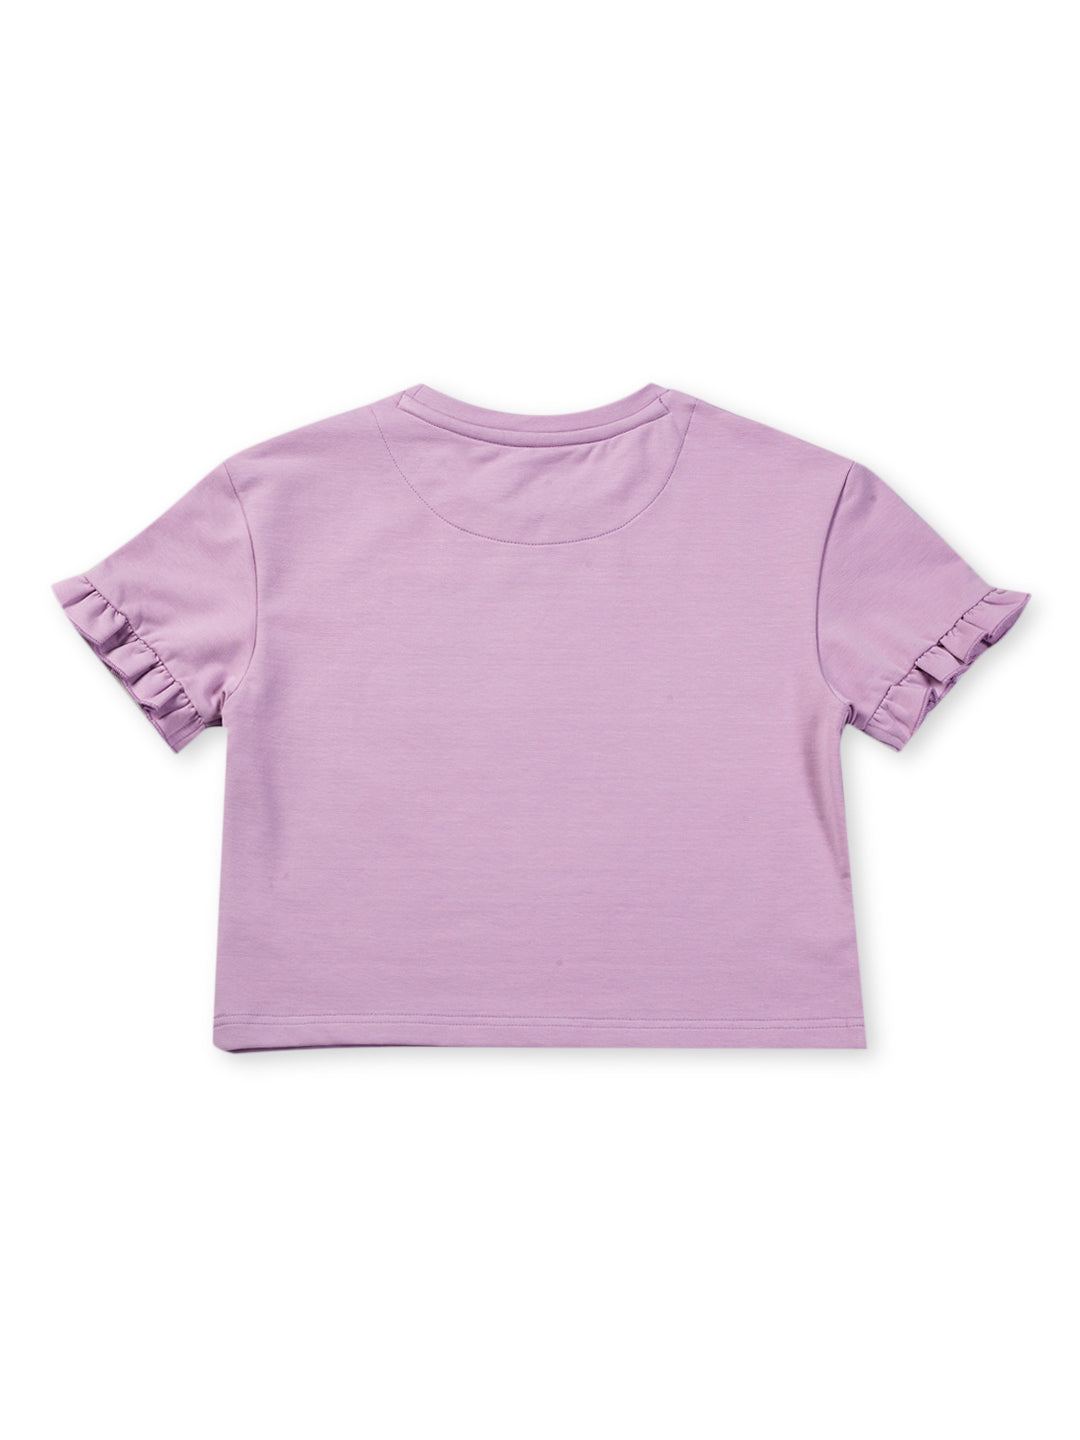 Girls Purple Cotton Solid Cordinate